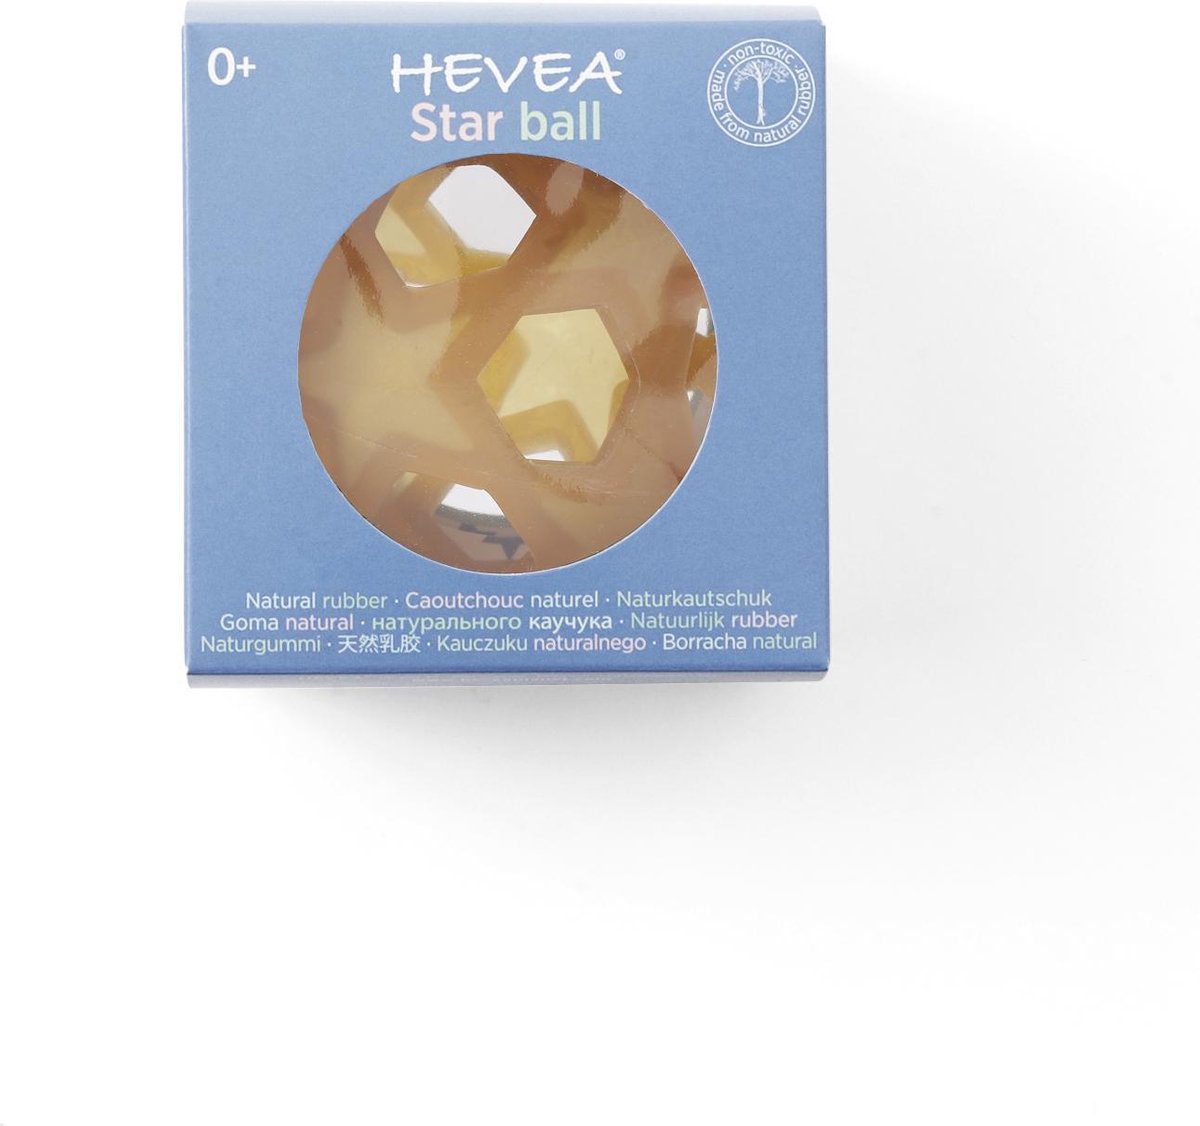 Hevea Speelbal ster - natuurrubber - vanaf 0+ - Jean's goods